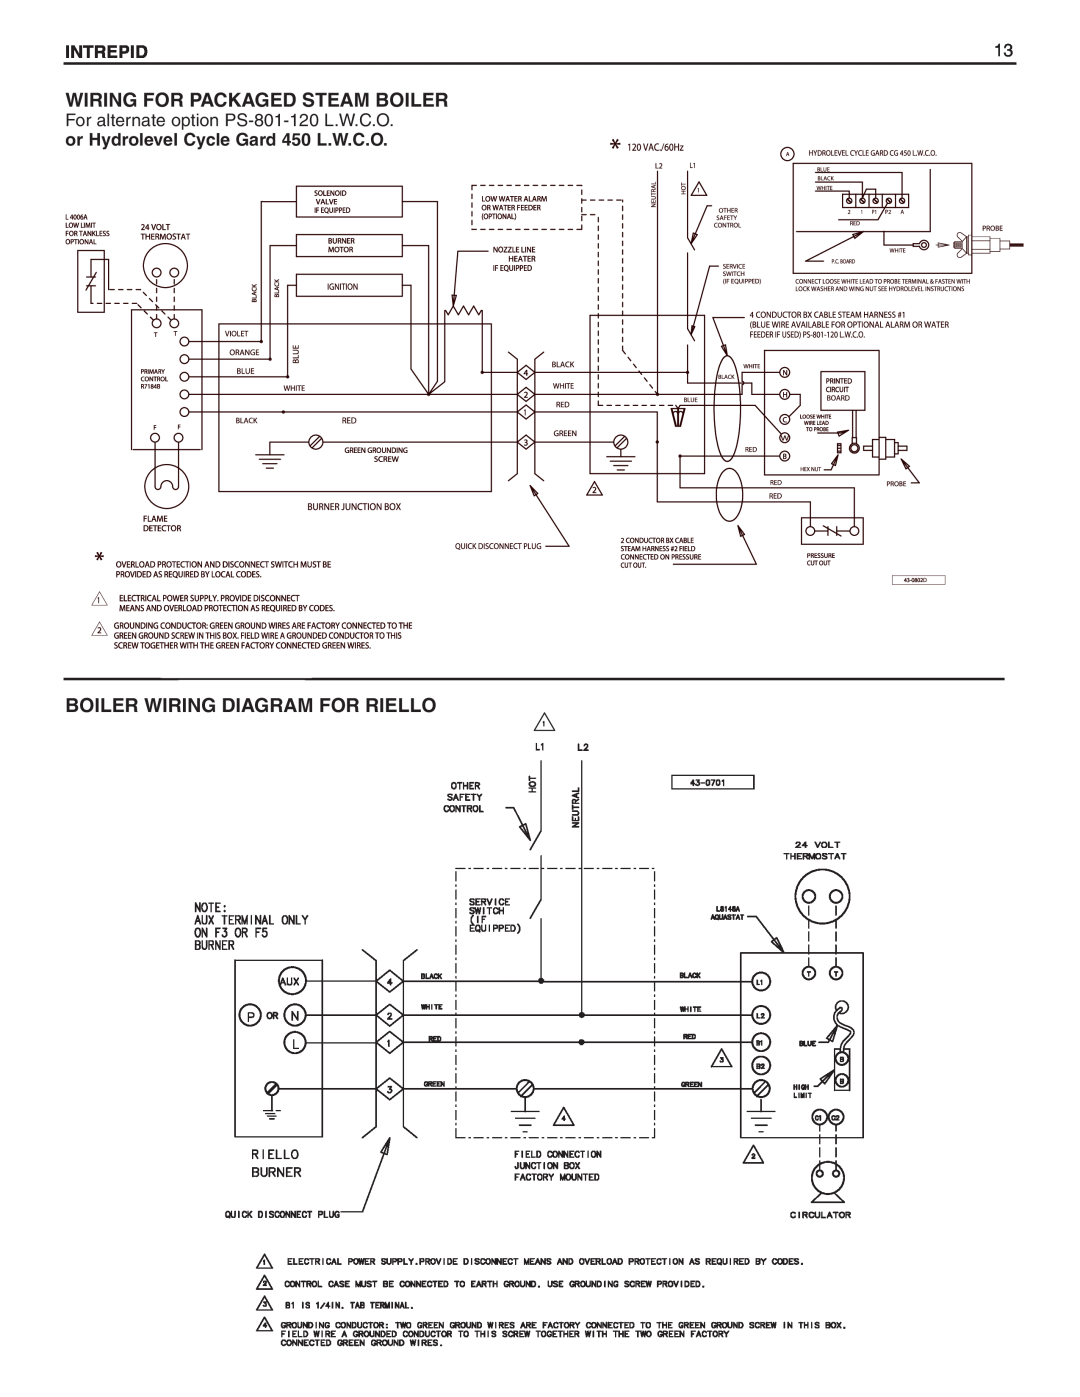 Slant/Fin Oil-fired Boiler dimensions Wiring For Packaged Steam Boiler, Boiler Wiring Diagram For Riello, Intrepid 